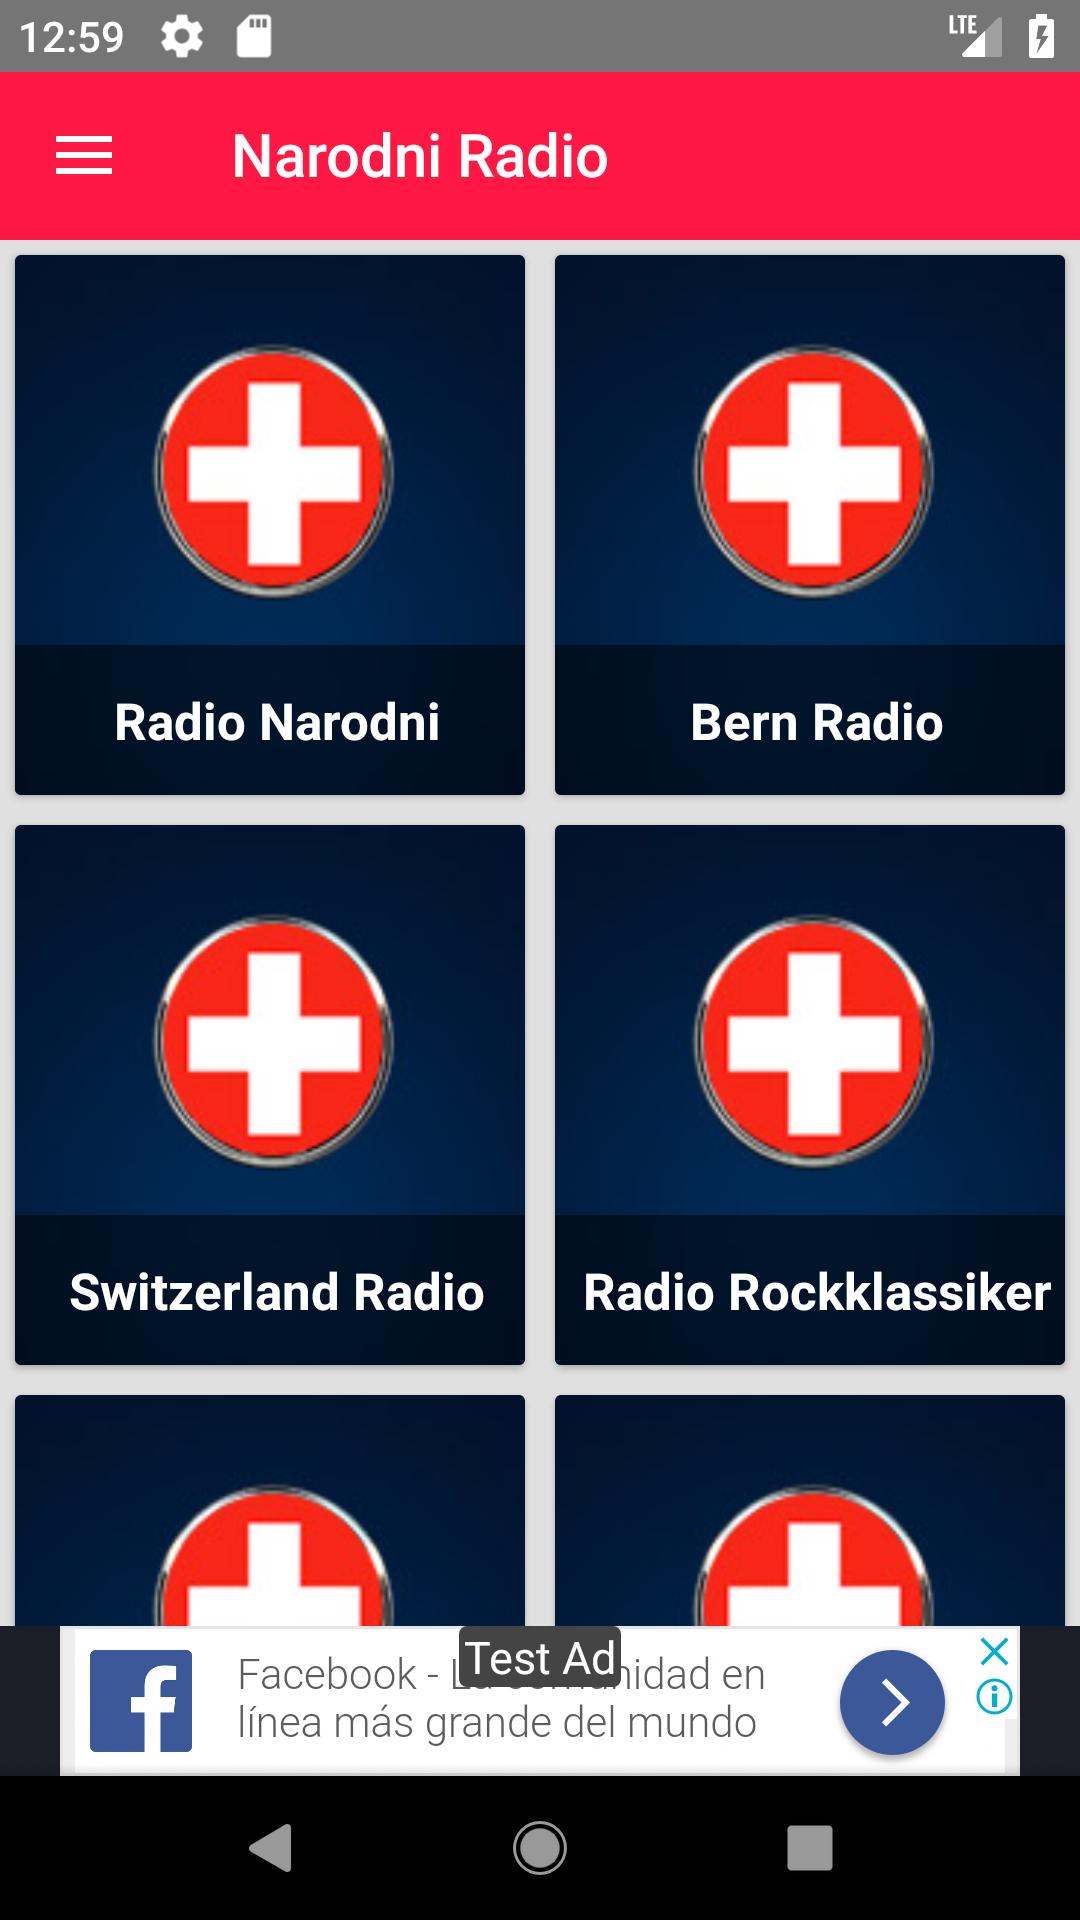 Zagreb Radio 107.5 Fm Record Radio Stream for Android - APK Download